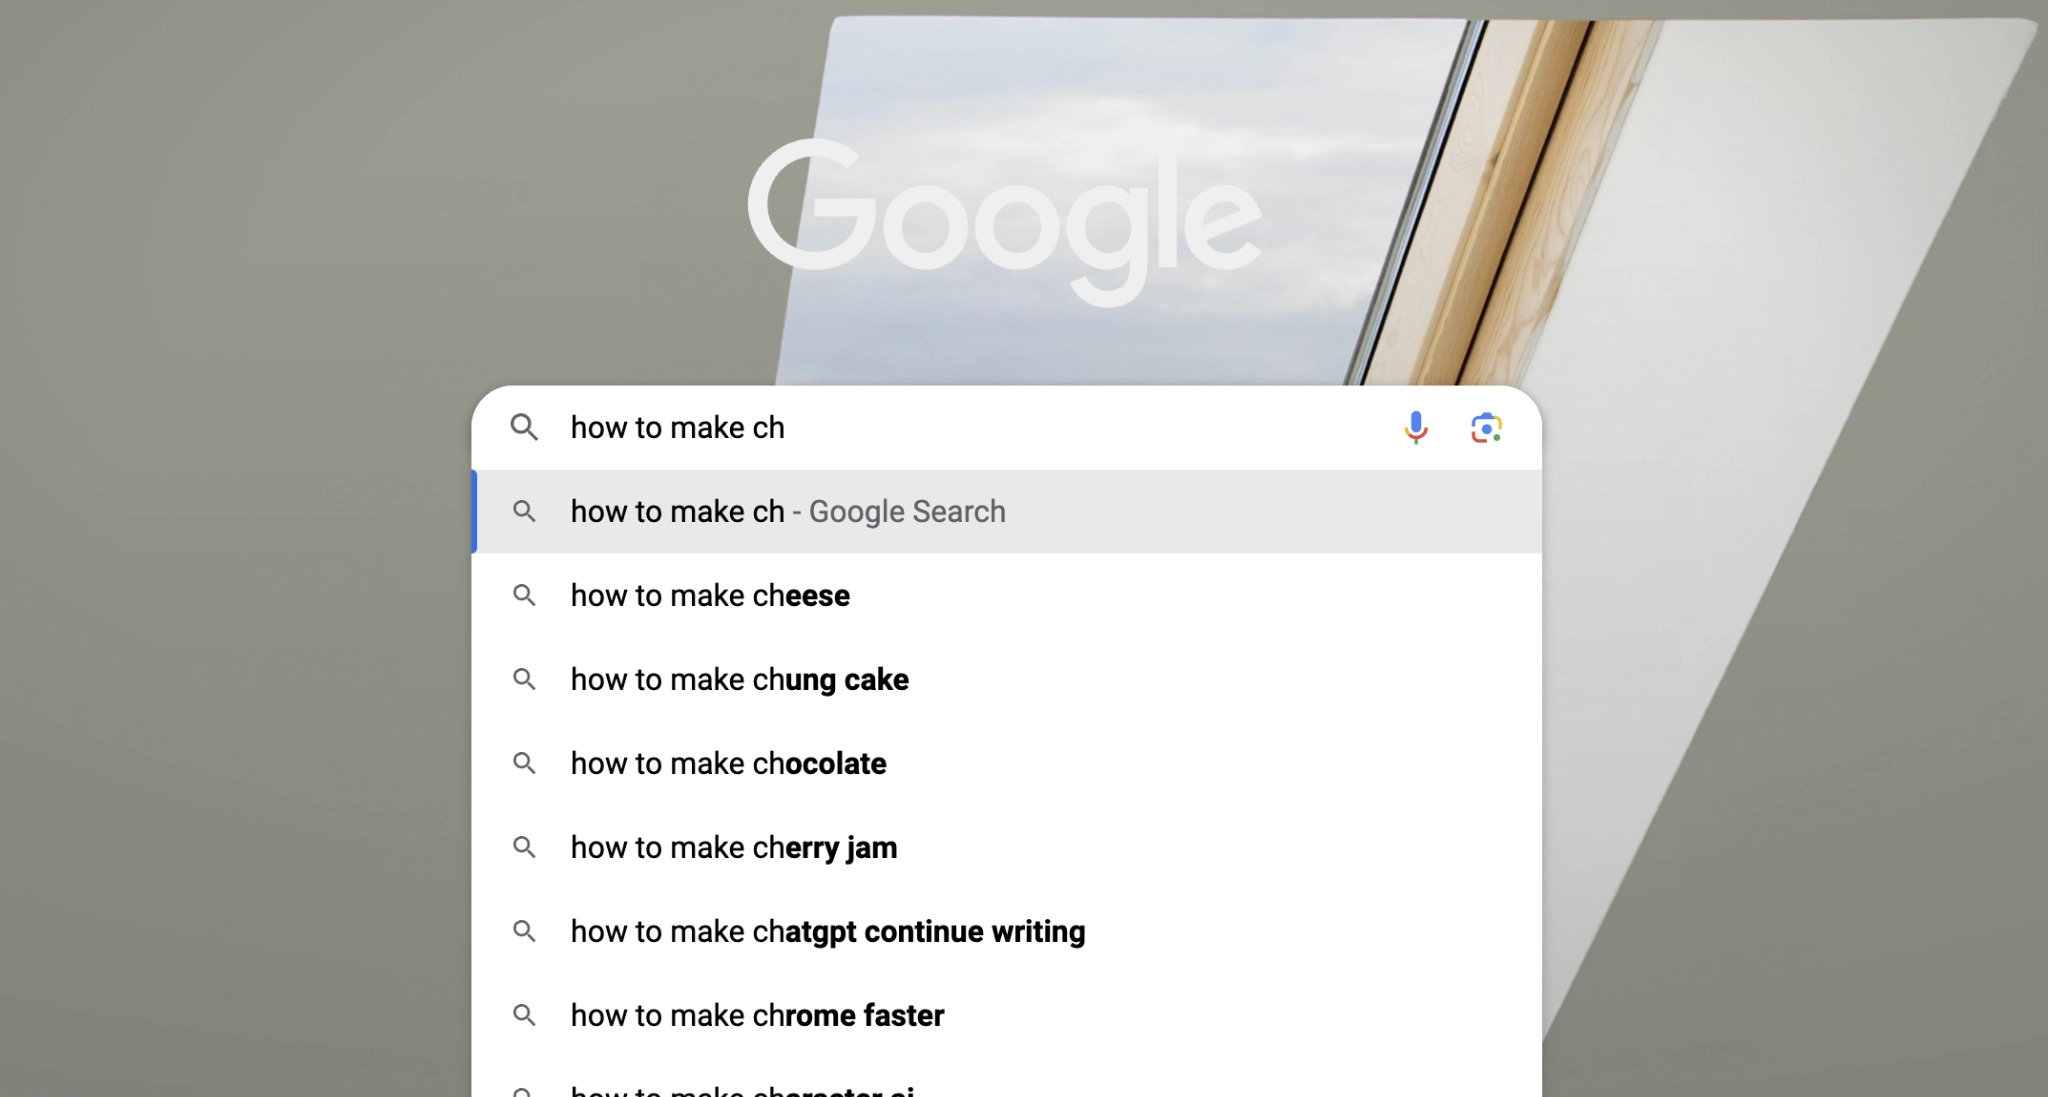 Google Suggest